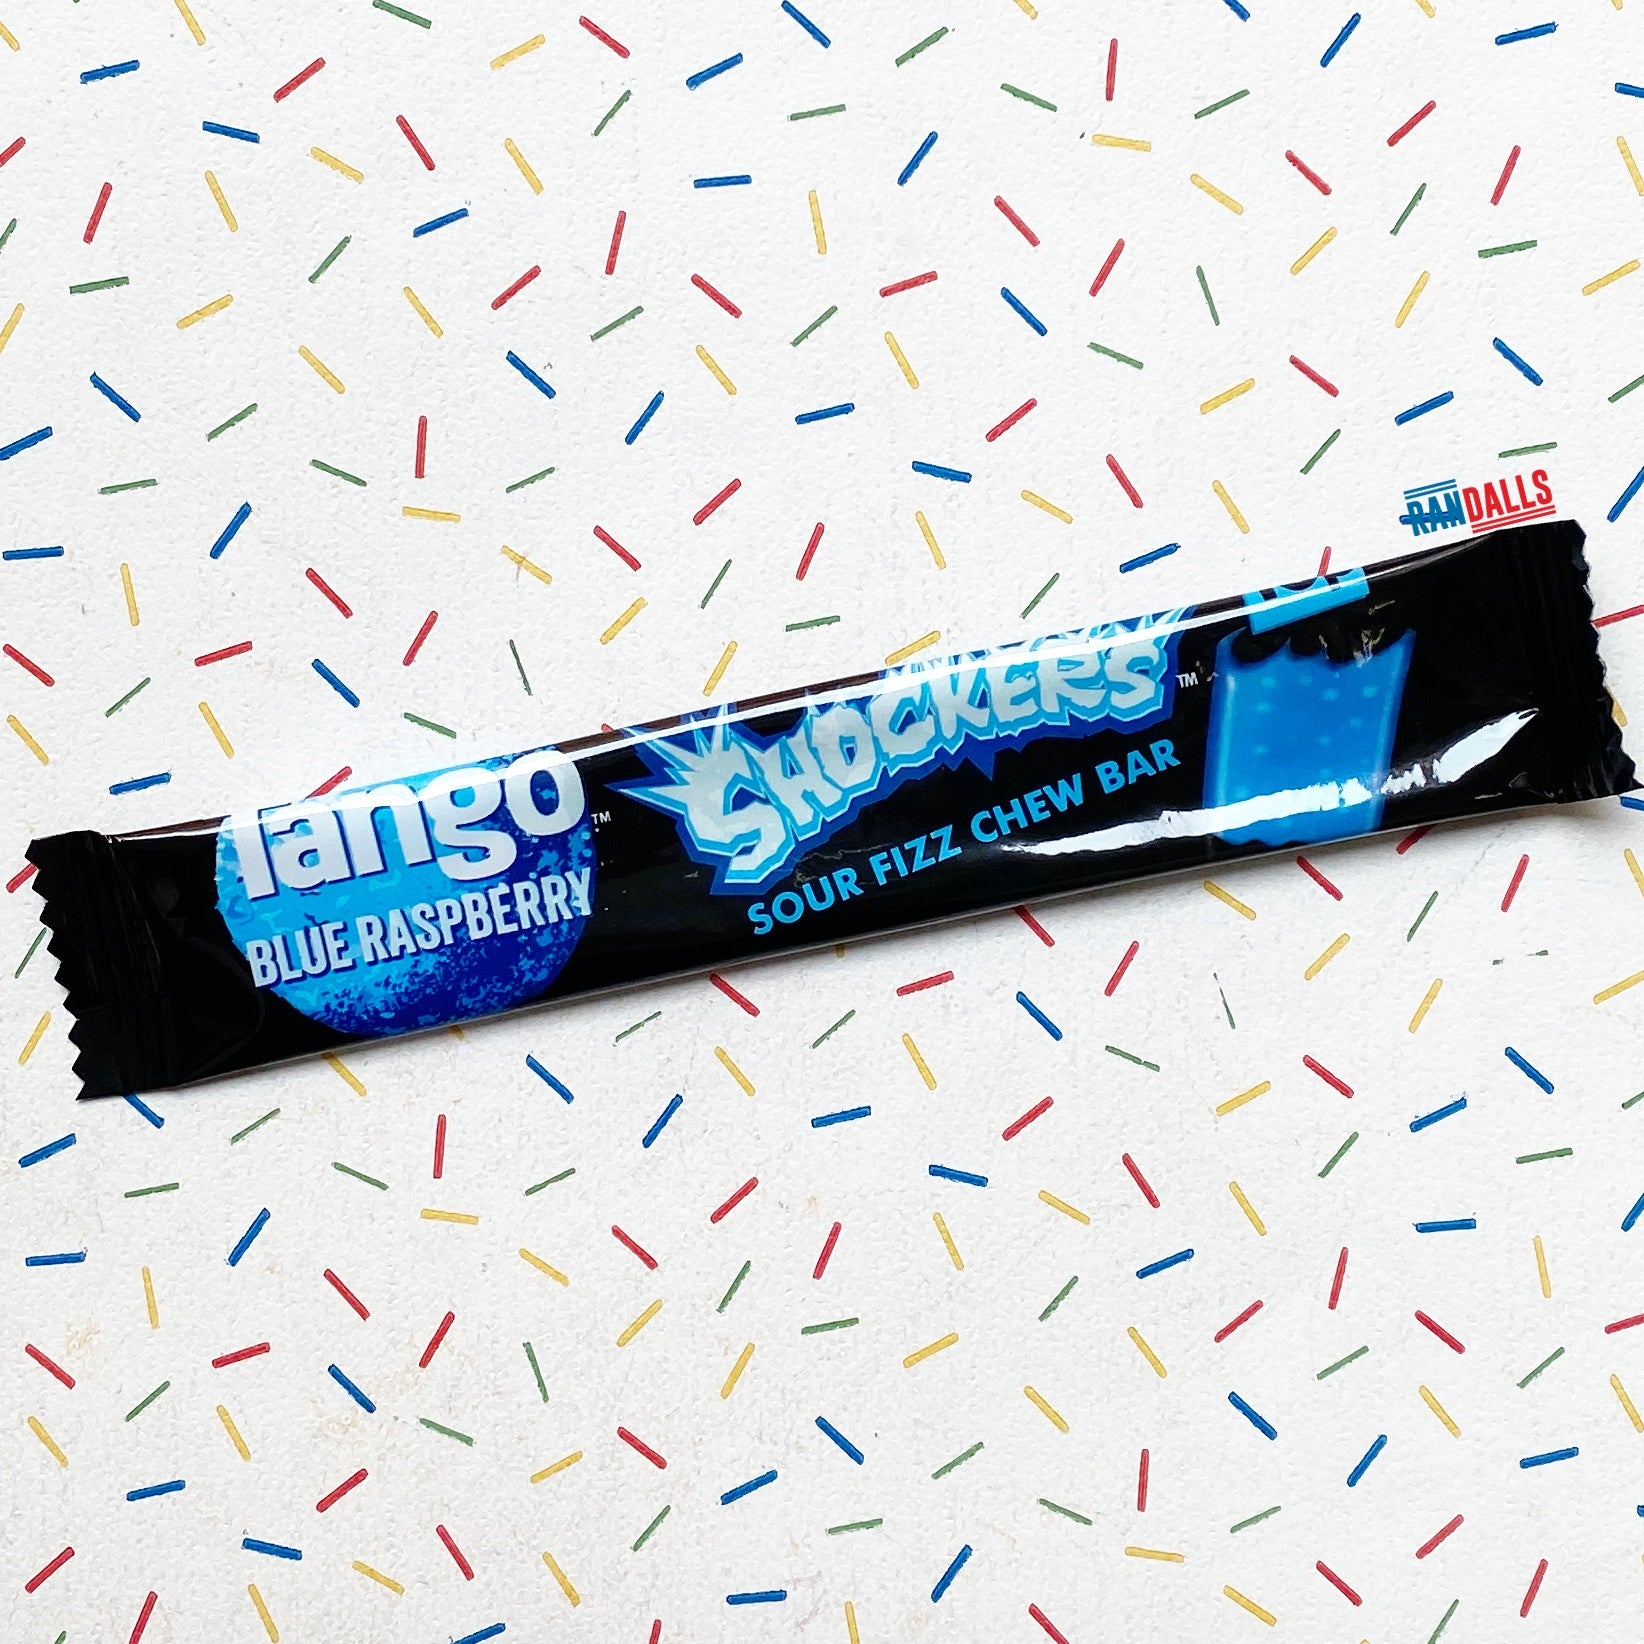 Tango Shockers BlueRaspberry Box 720g – PurrfectTreats